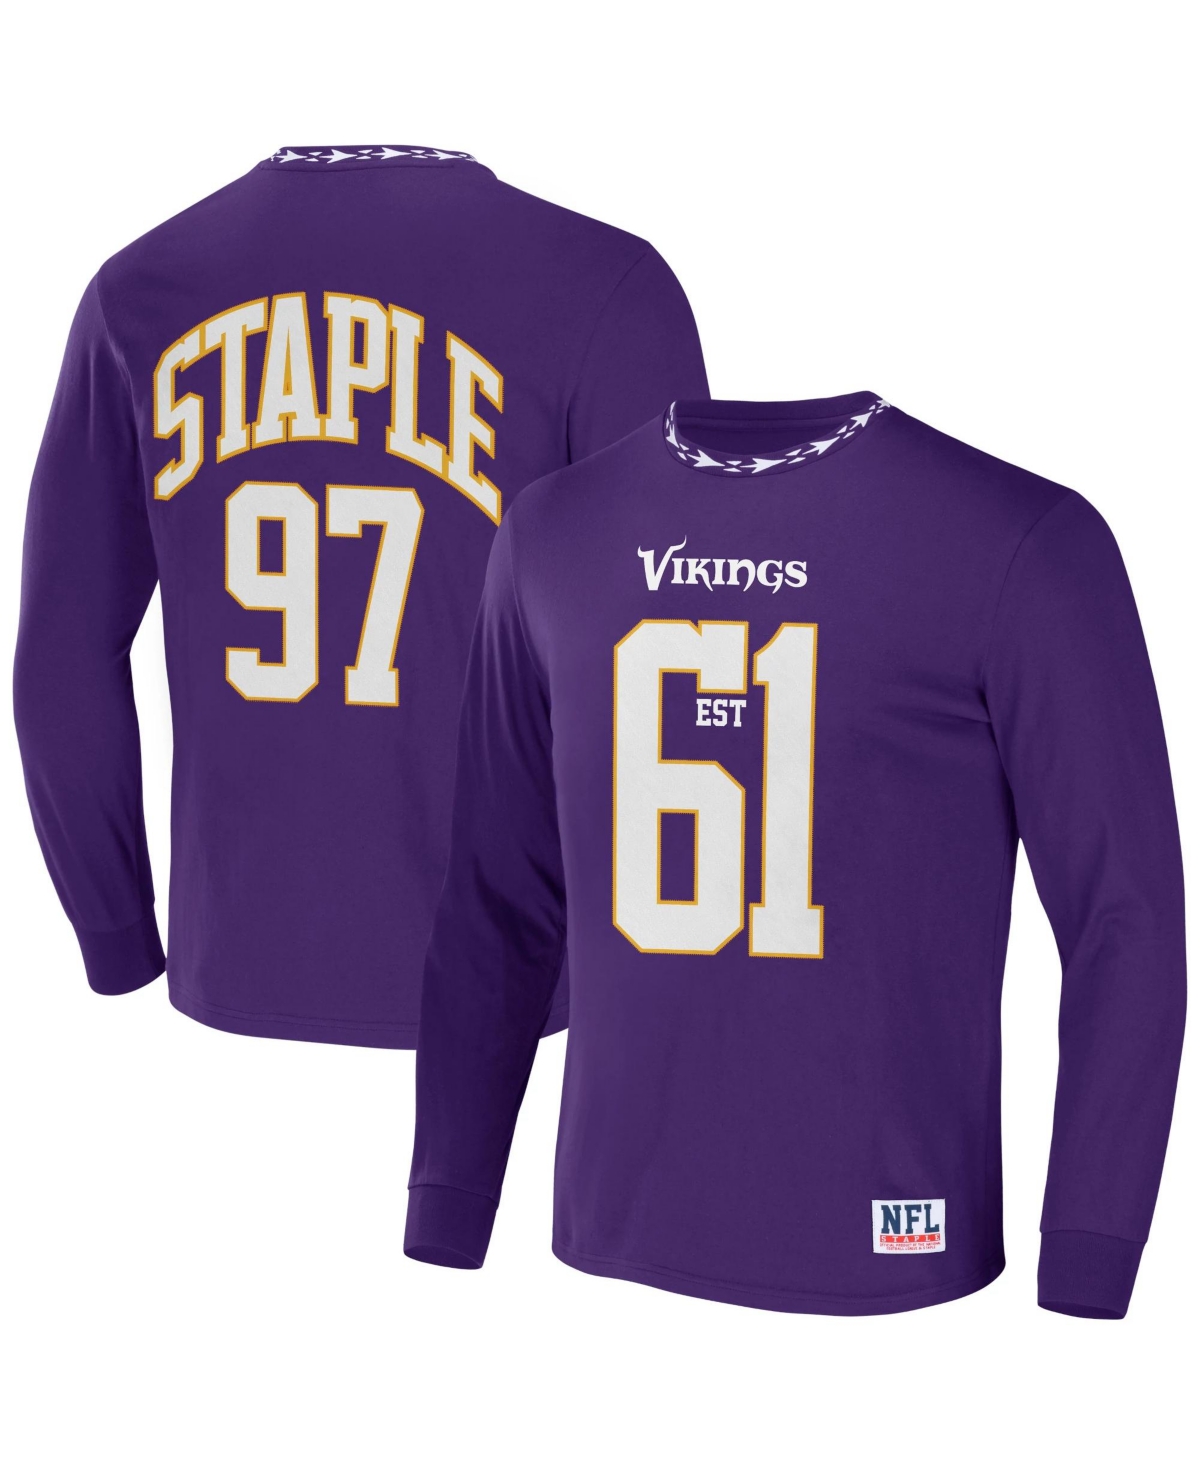 Men's Nfl X Staple Purple Minnesota Vikings Core Long Sleeve Jersey Style T-shirt - Purple